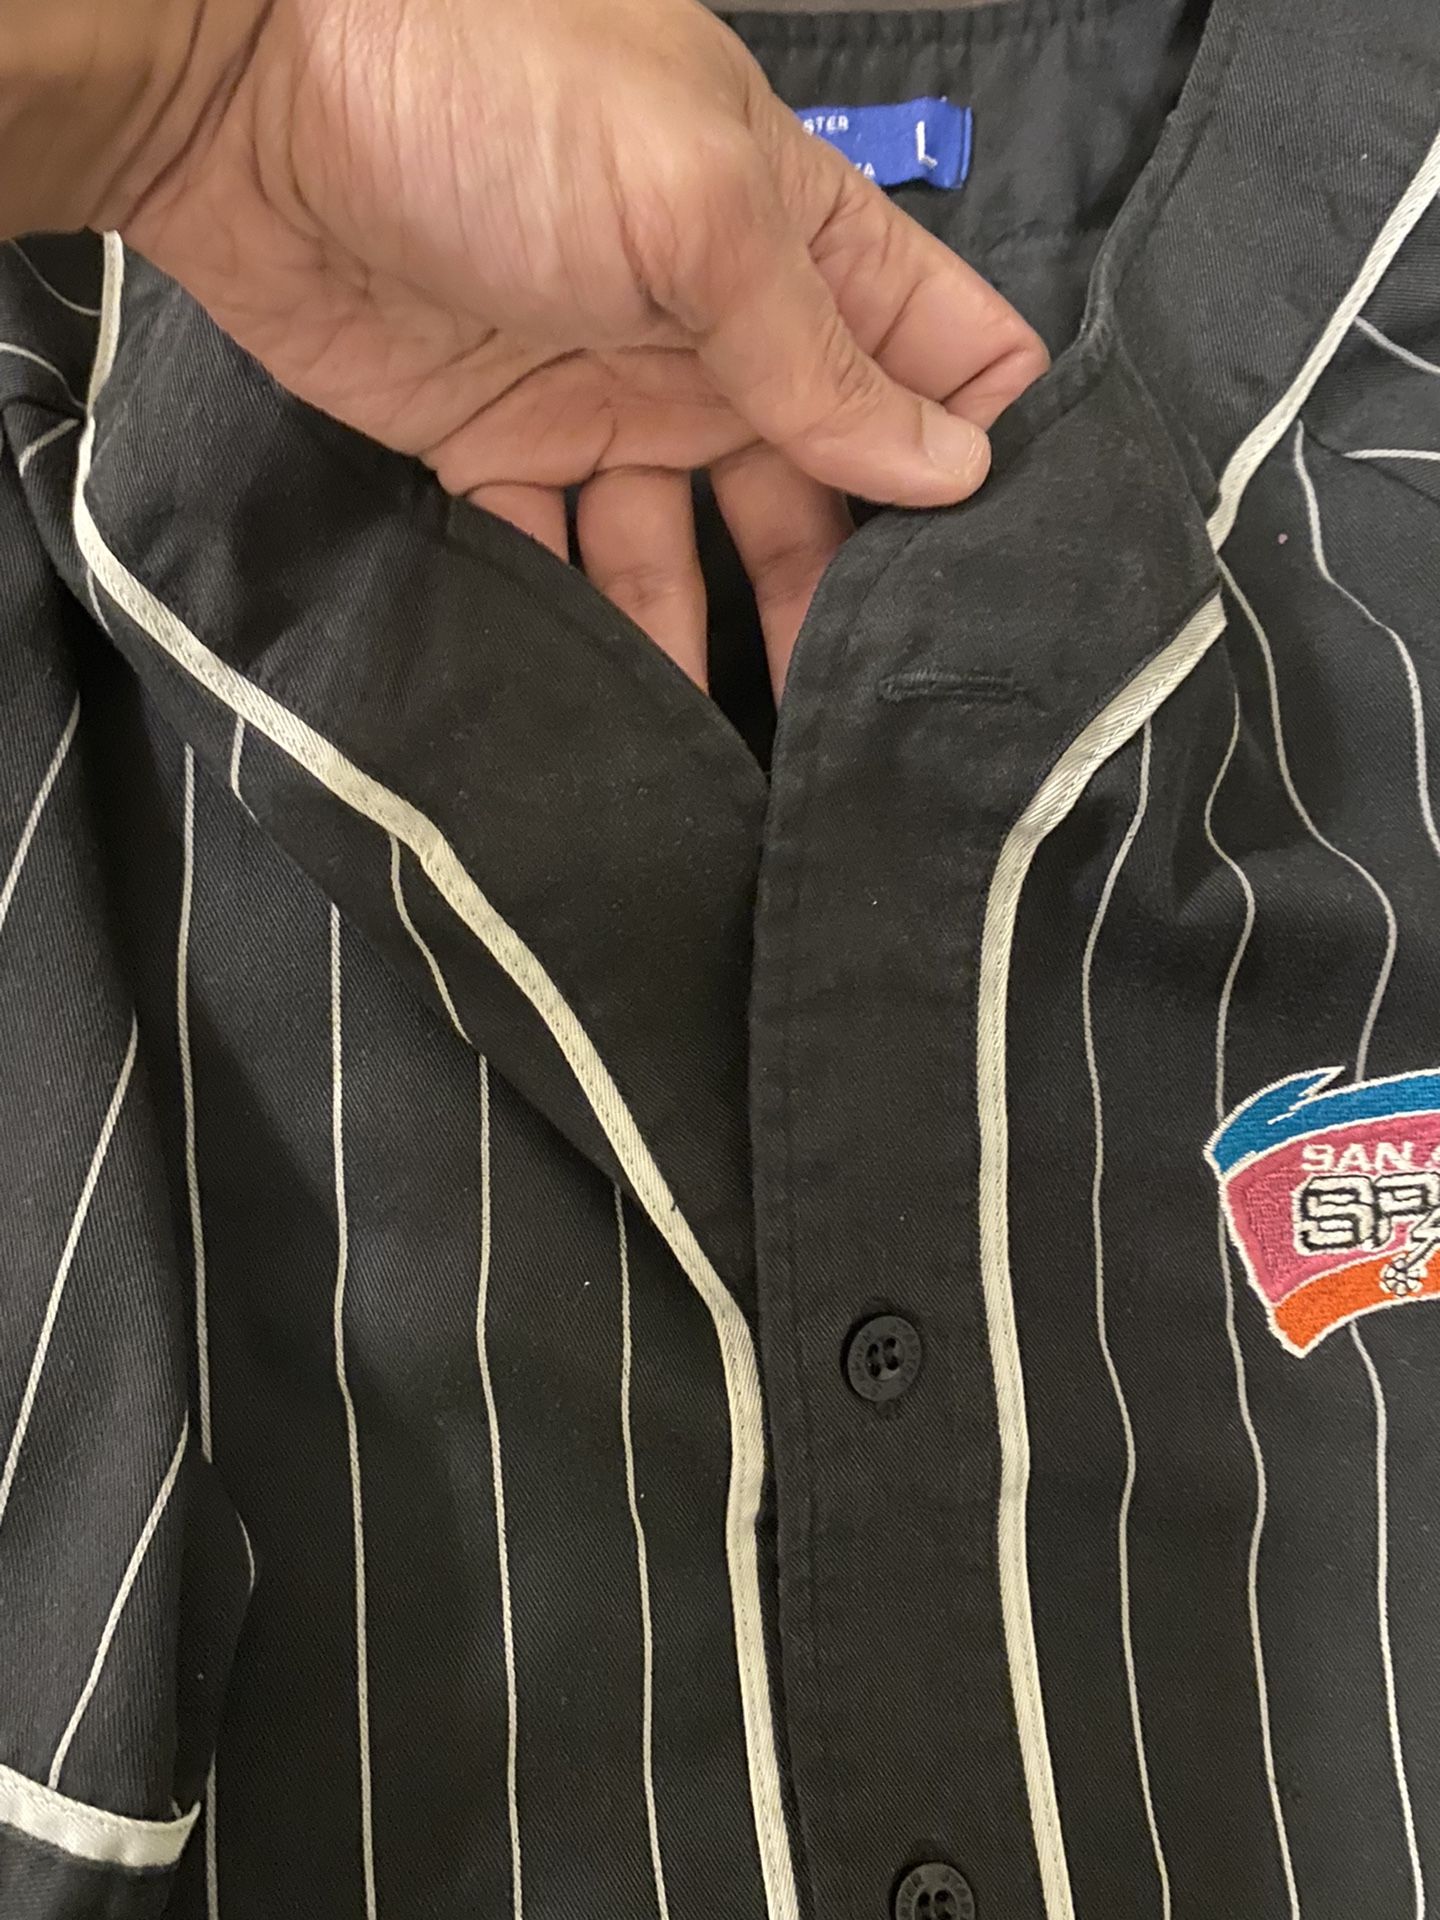 Spurs Baseball Jersey for Sale in San Antonio, TX - OfferUp